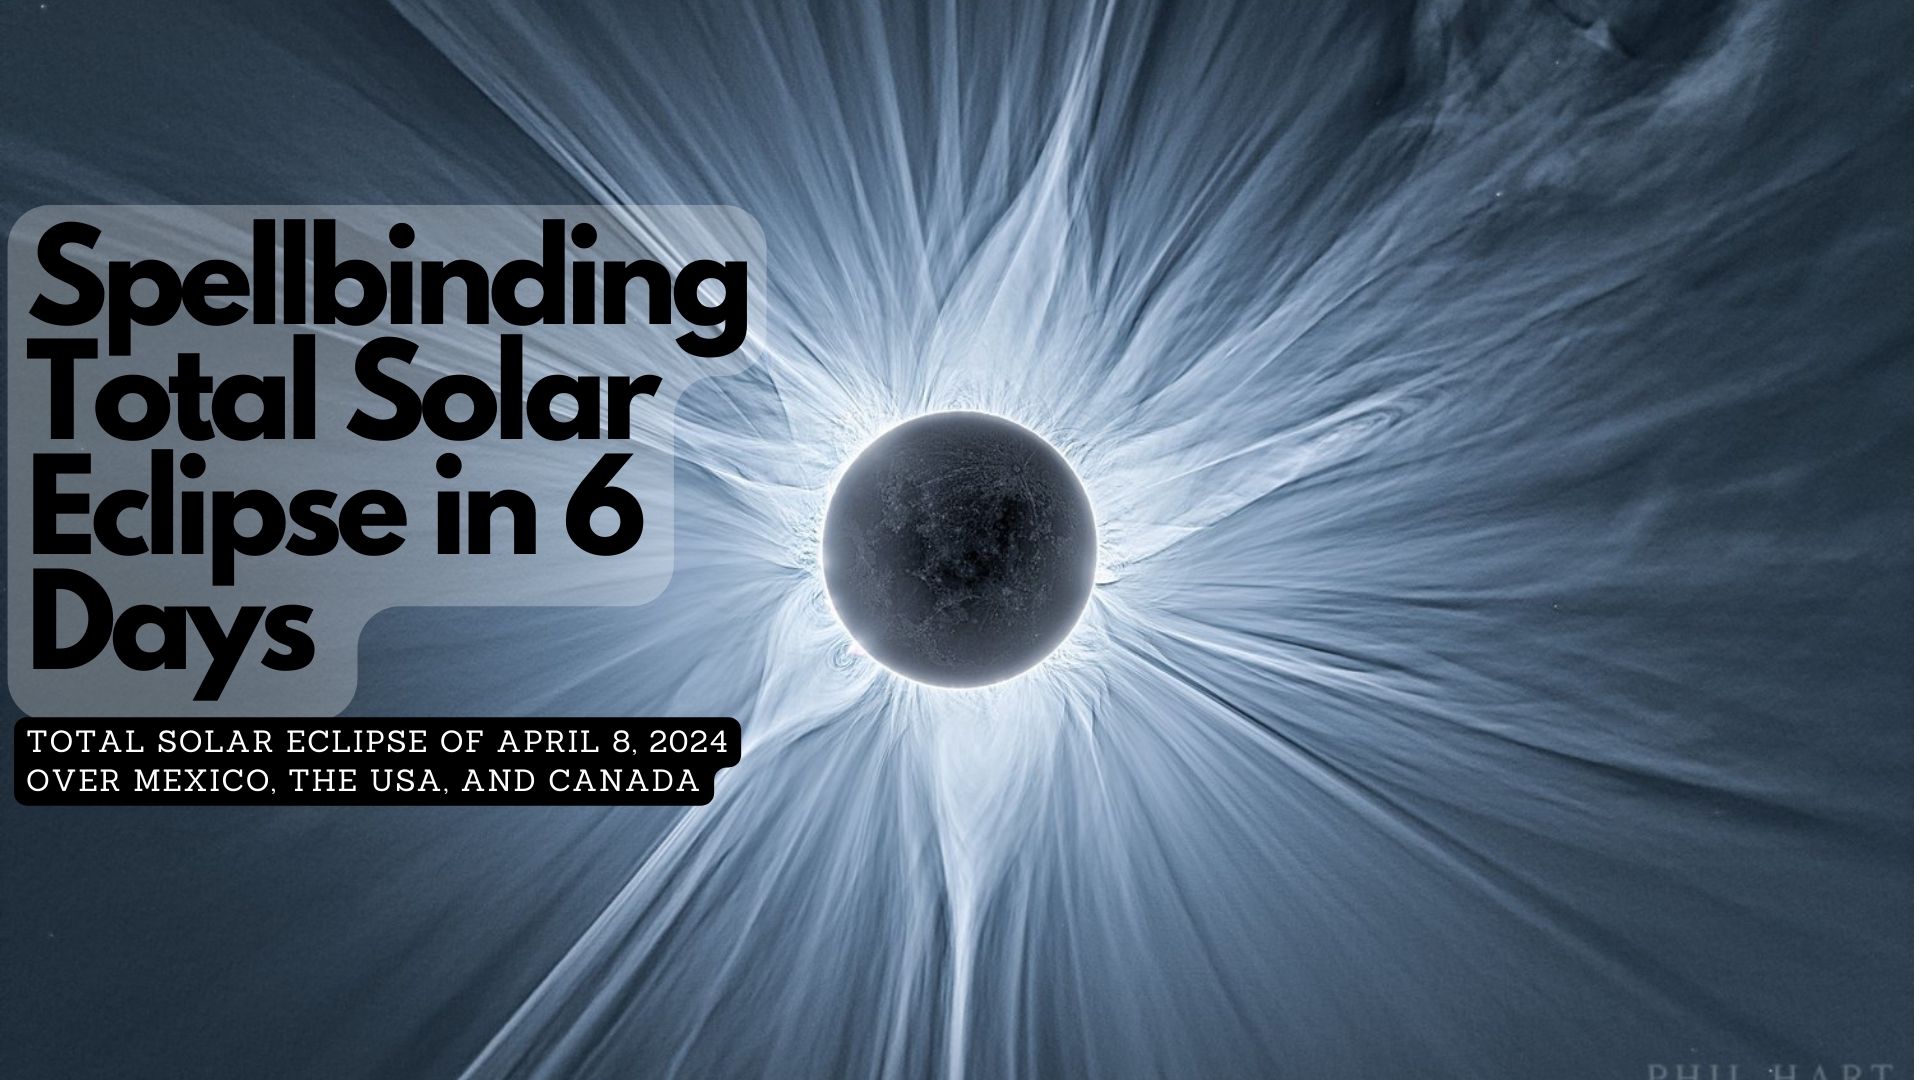 Spellbinding Total Solar Eclipse in 6 Days 